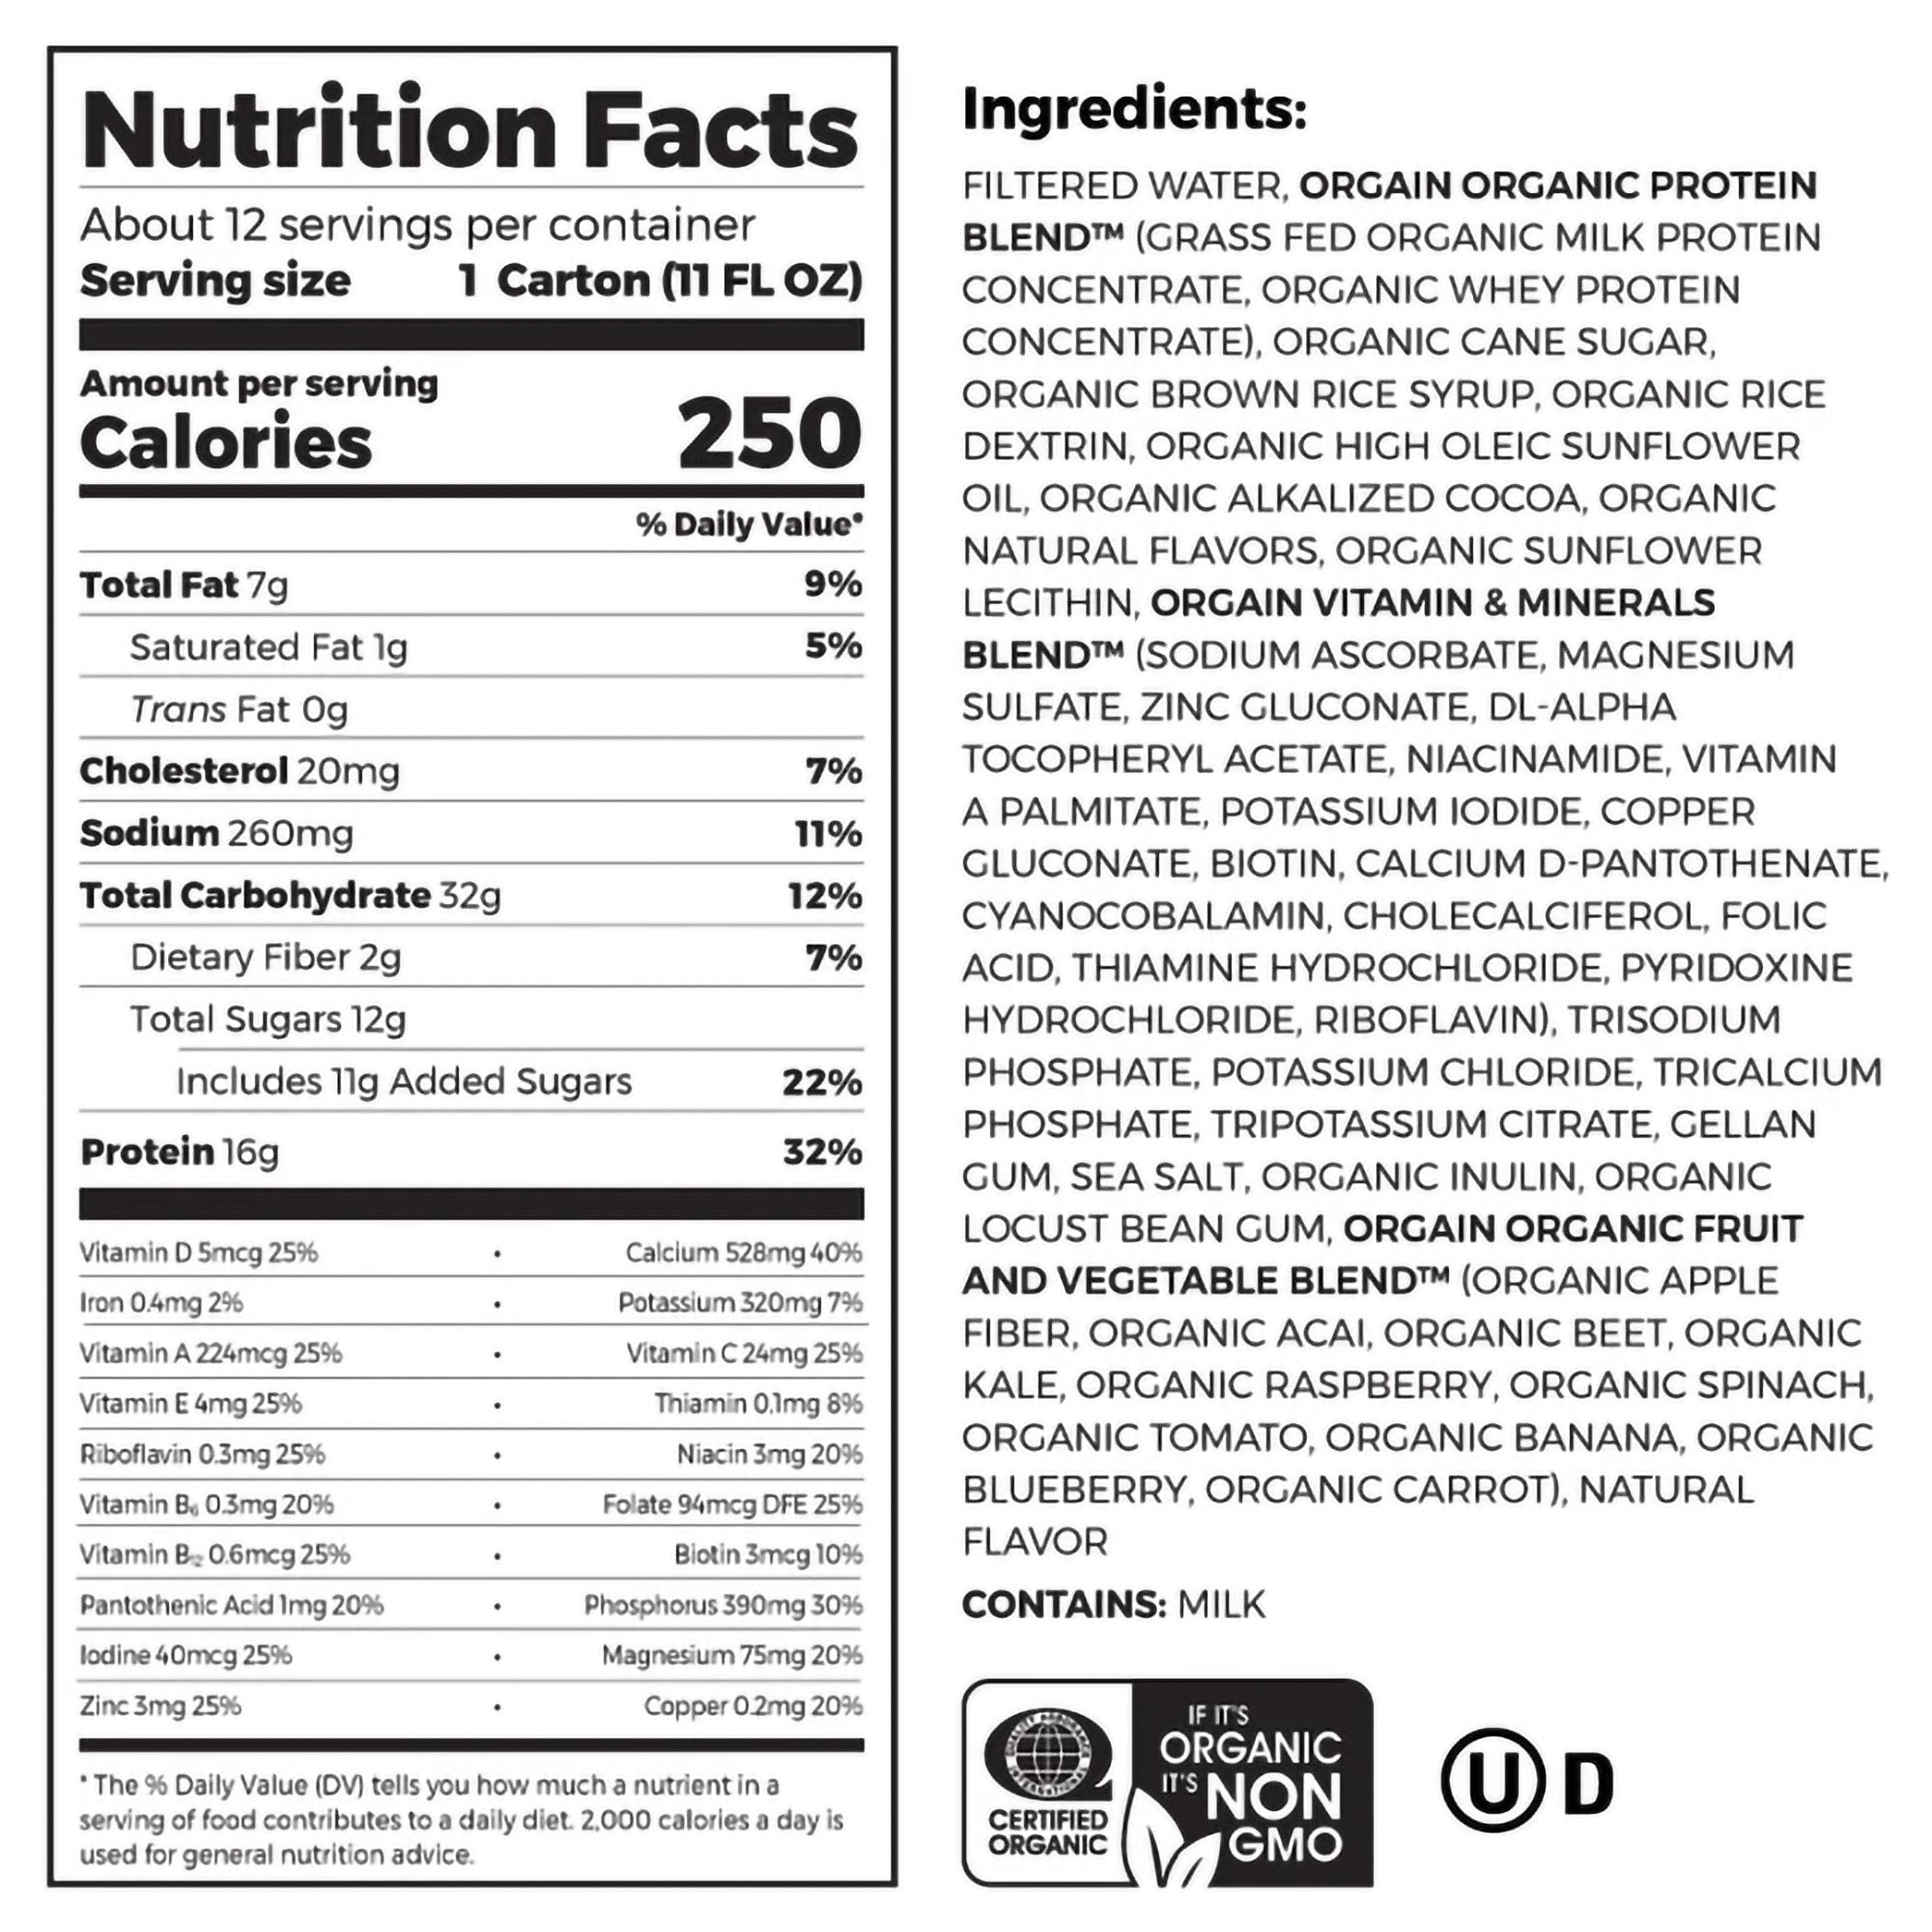 Oral Supplement Orgain Organic Nutritional Shake Creamy Chocolate Fudge Flavor Liquid 11 oz. Carton